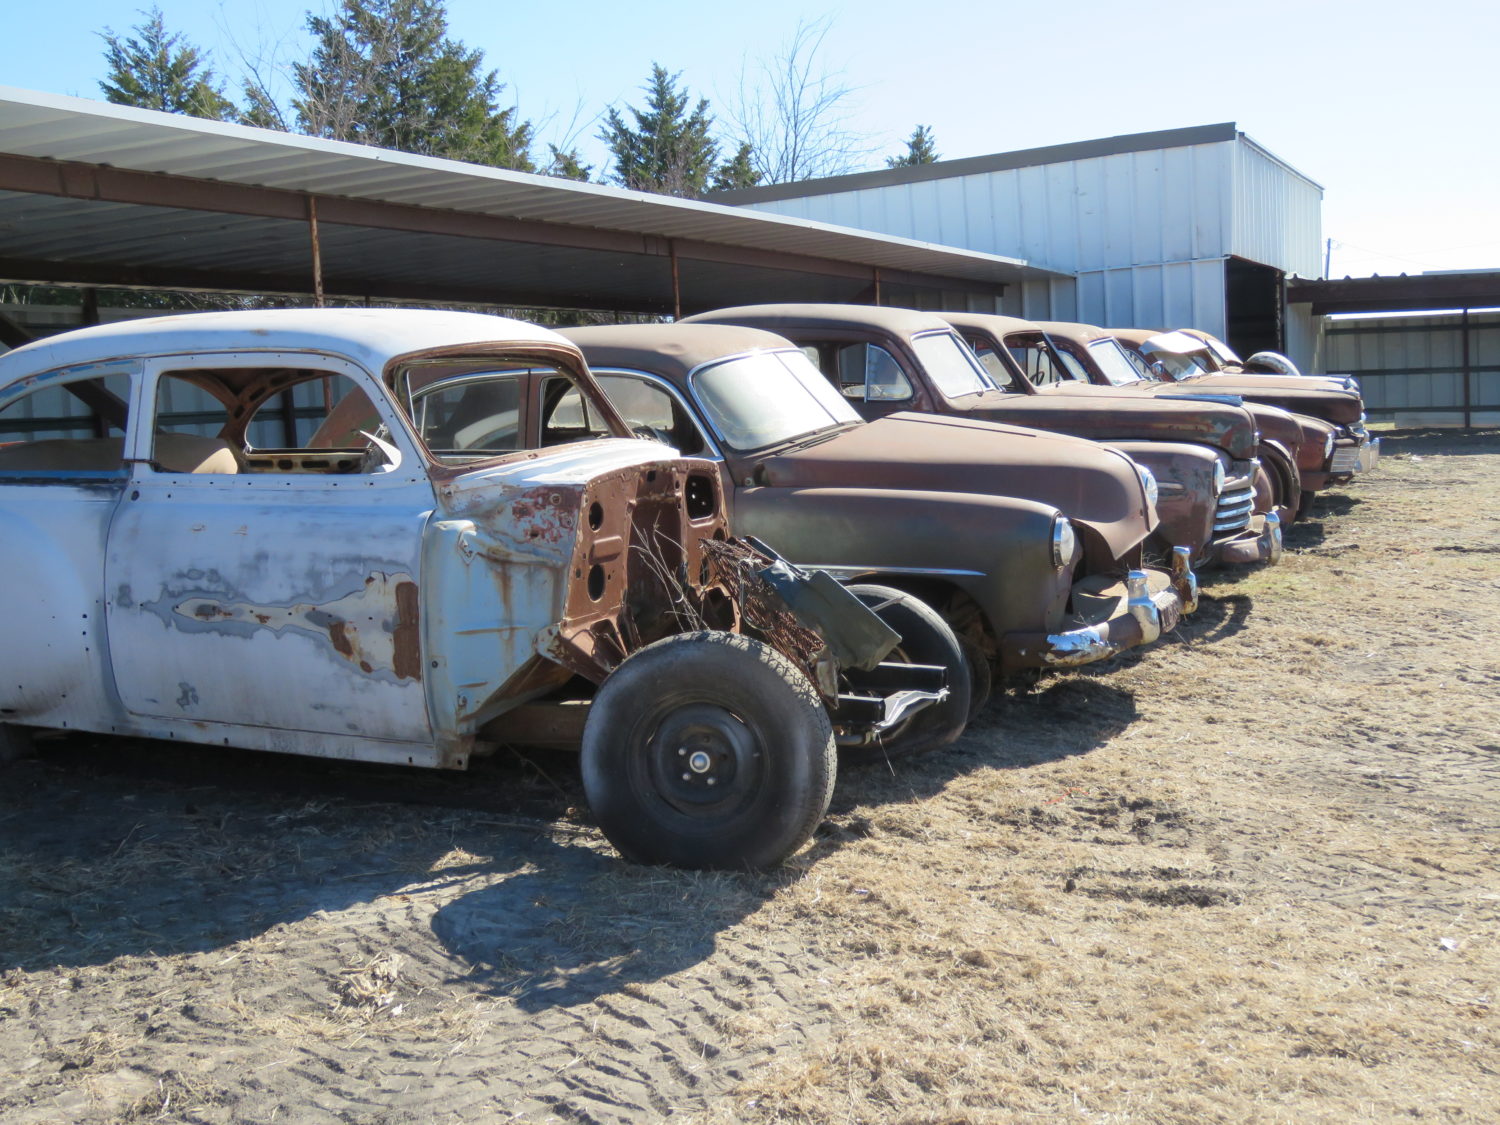 200 Plus Classic Cars at Auction! Dennis Collin's Coffee Walk Presents Restoration Revival Auction!  - image 9